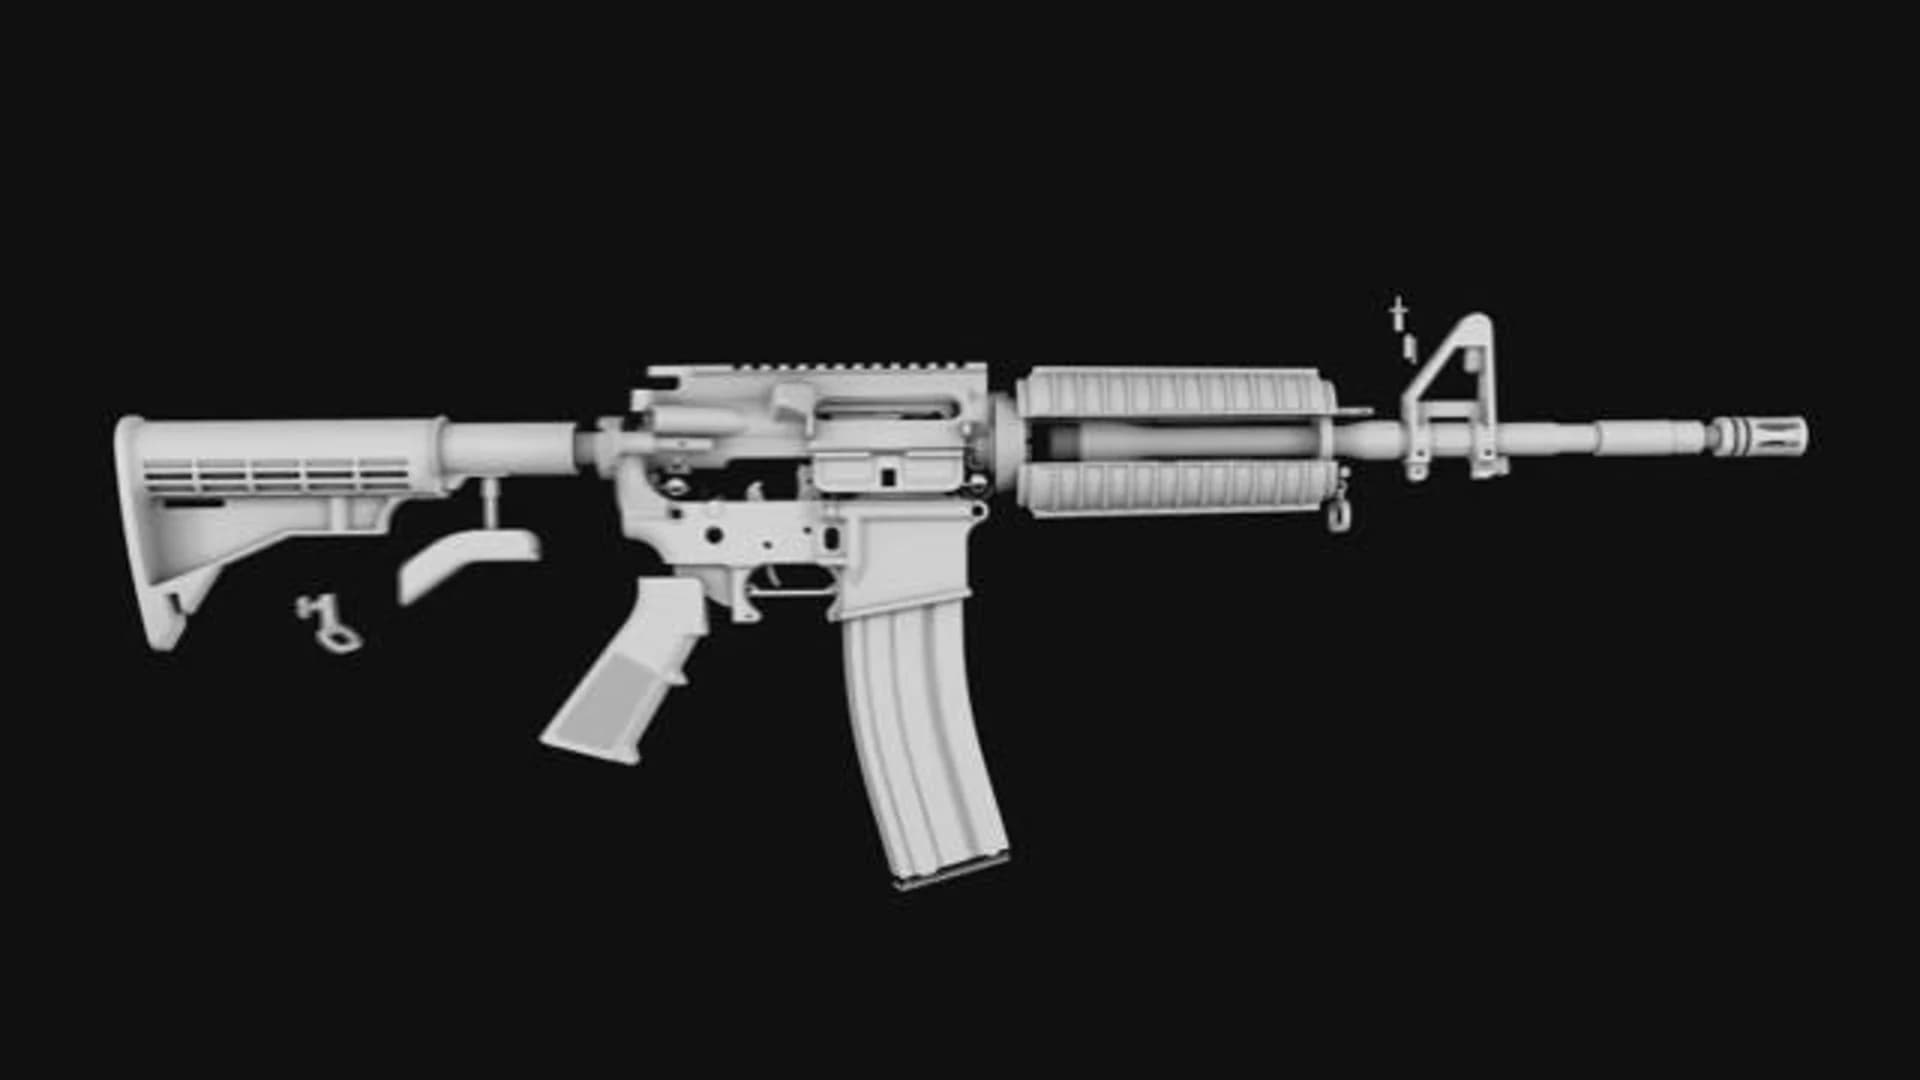 Judge blocks release of blueprints for 3D-printed guns